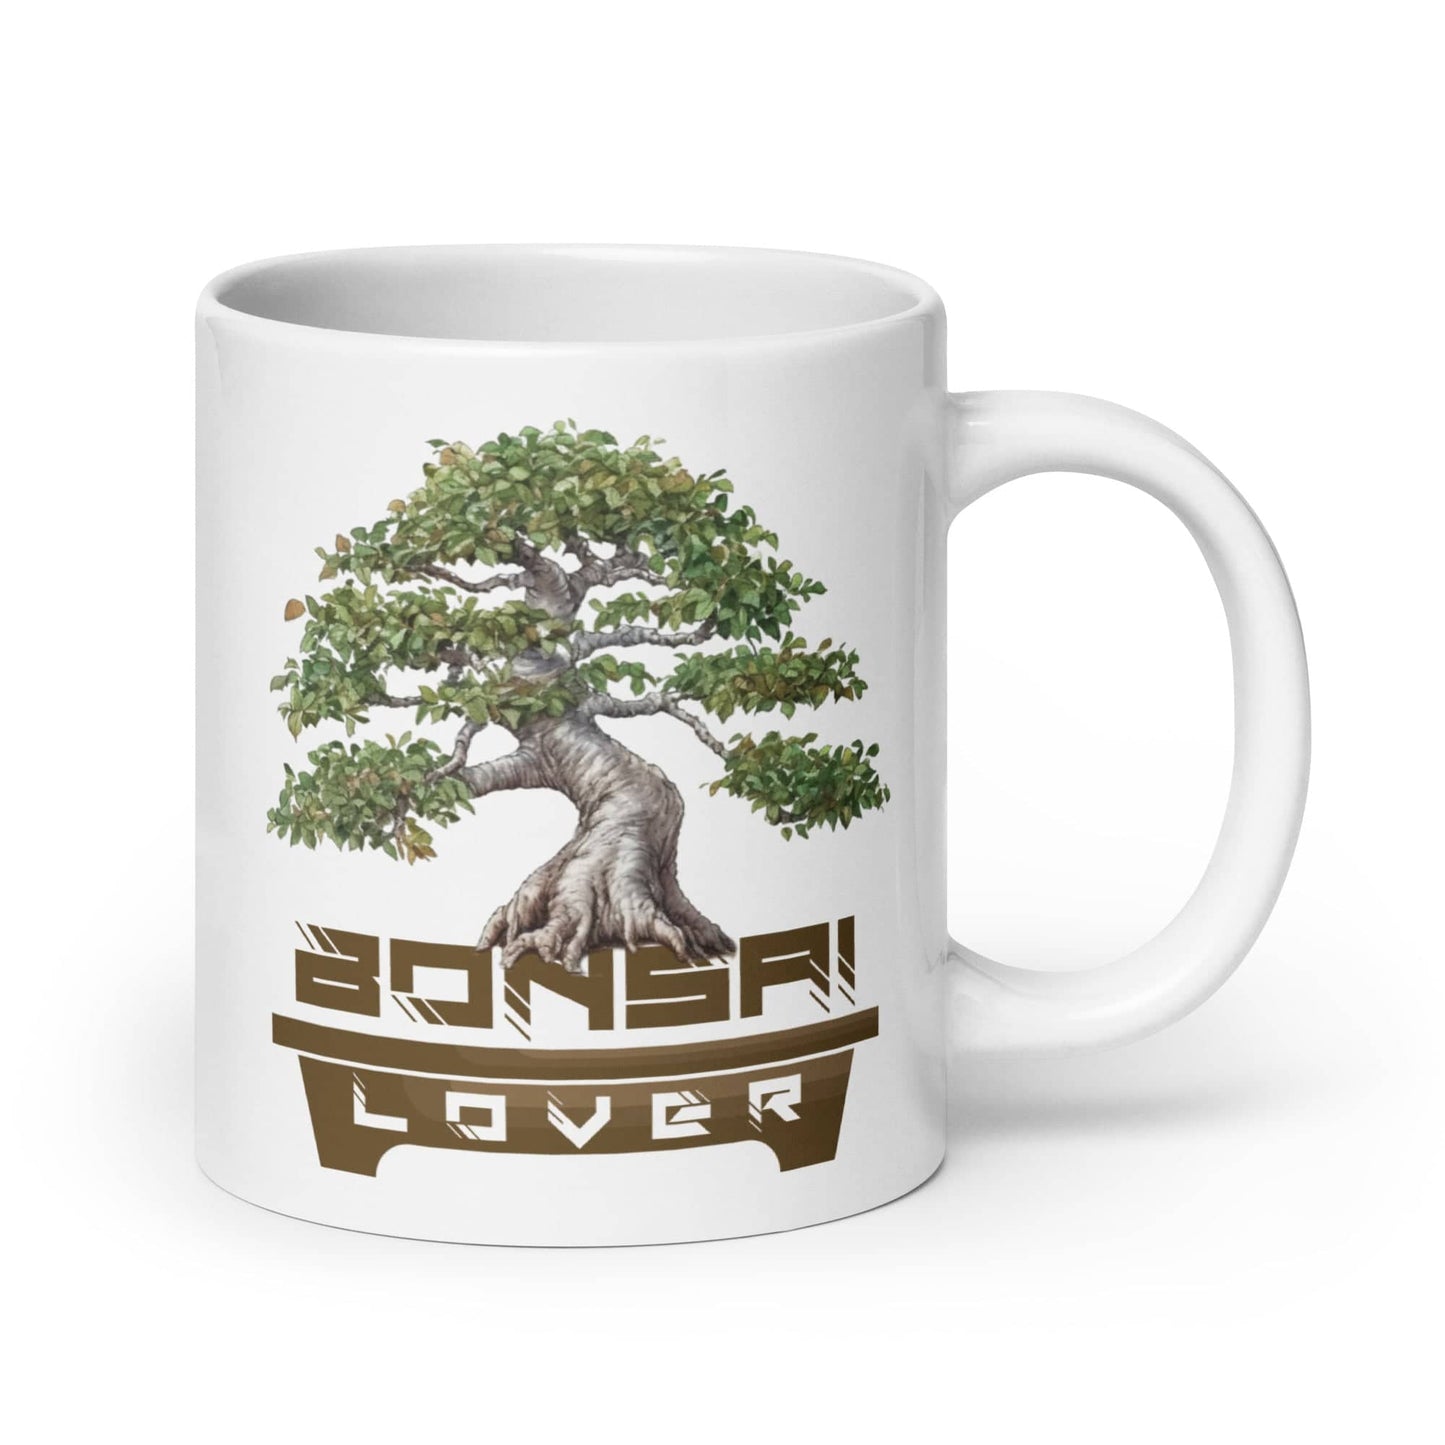 Bonsai Lover Coffee mug